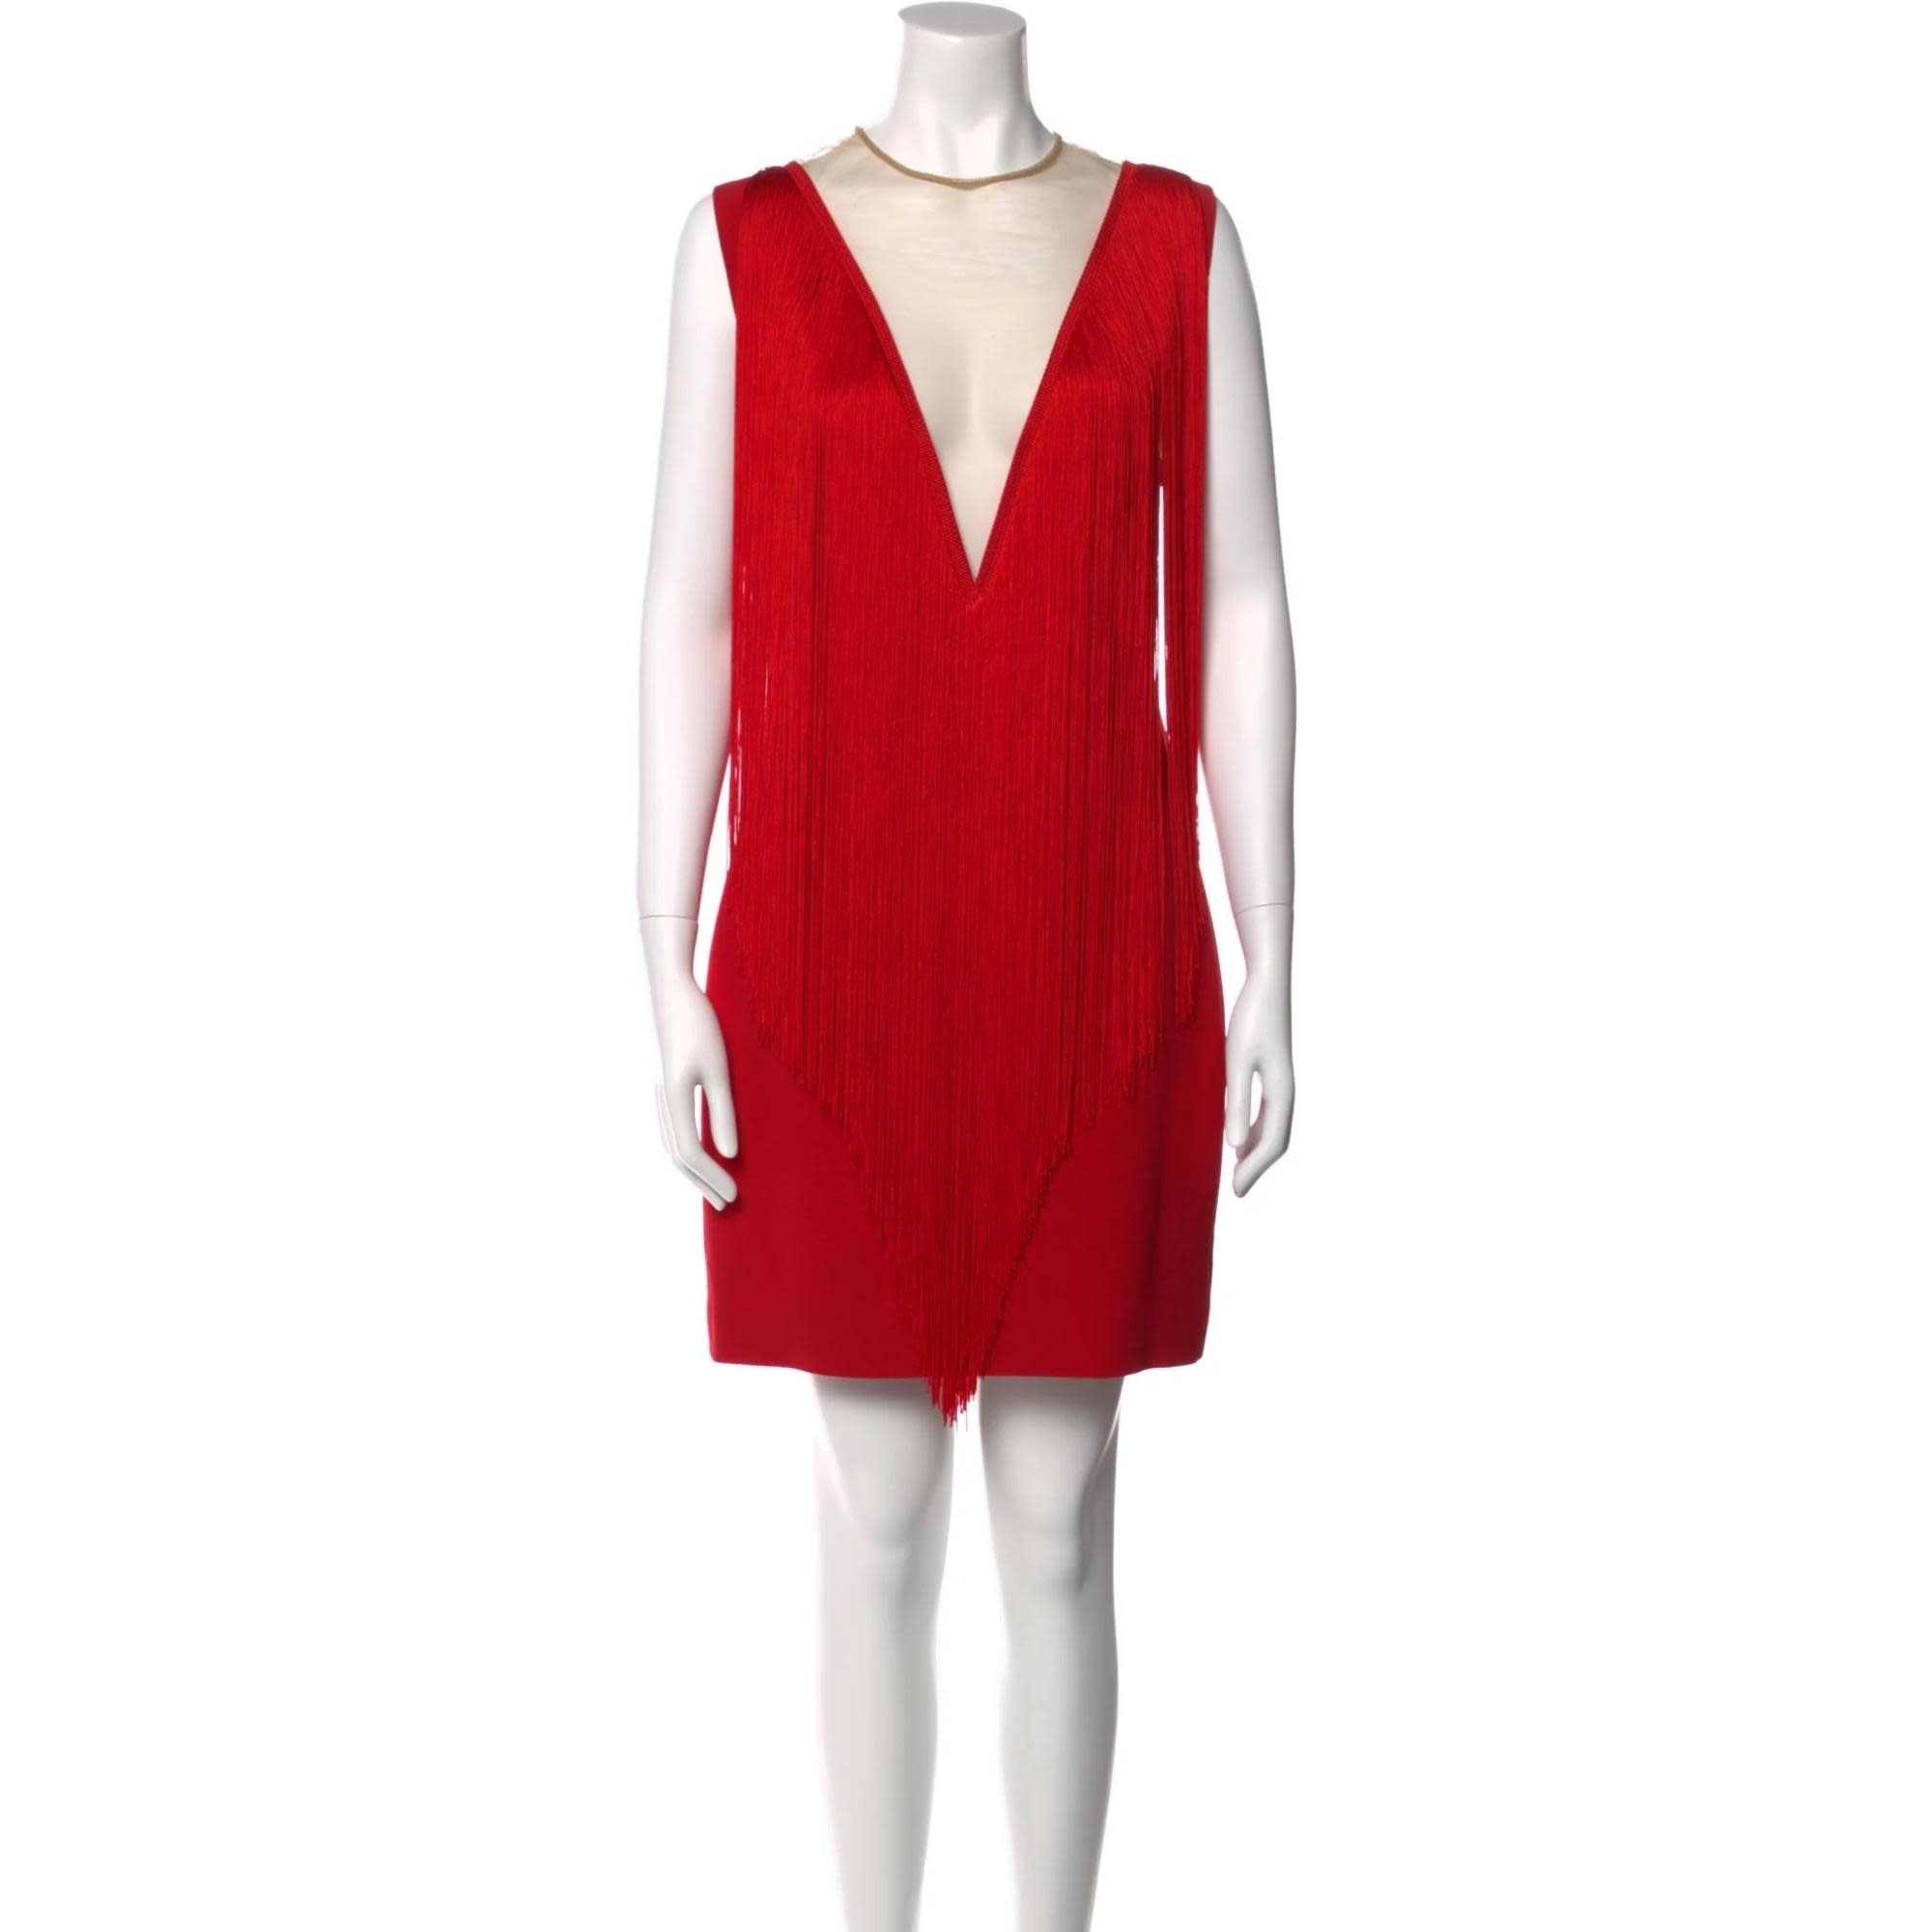 RED FRINGE SHIFT MINI DRESS (US6, IT42)